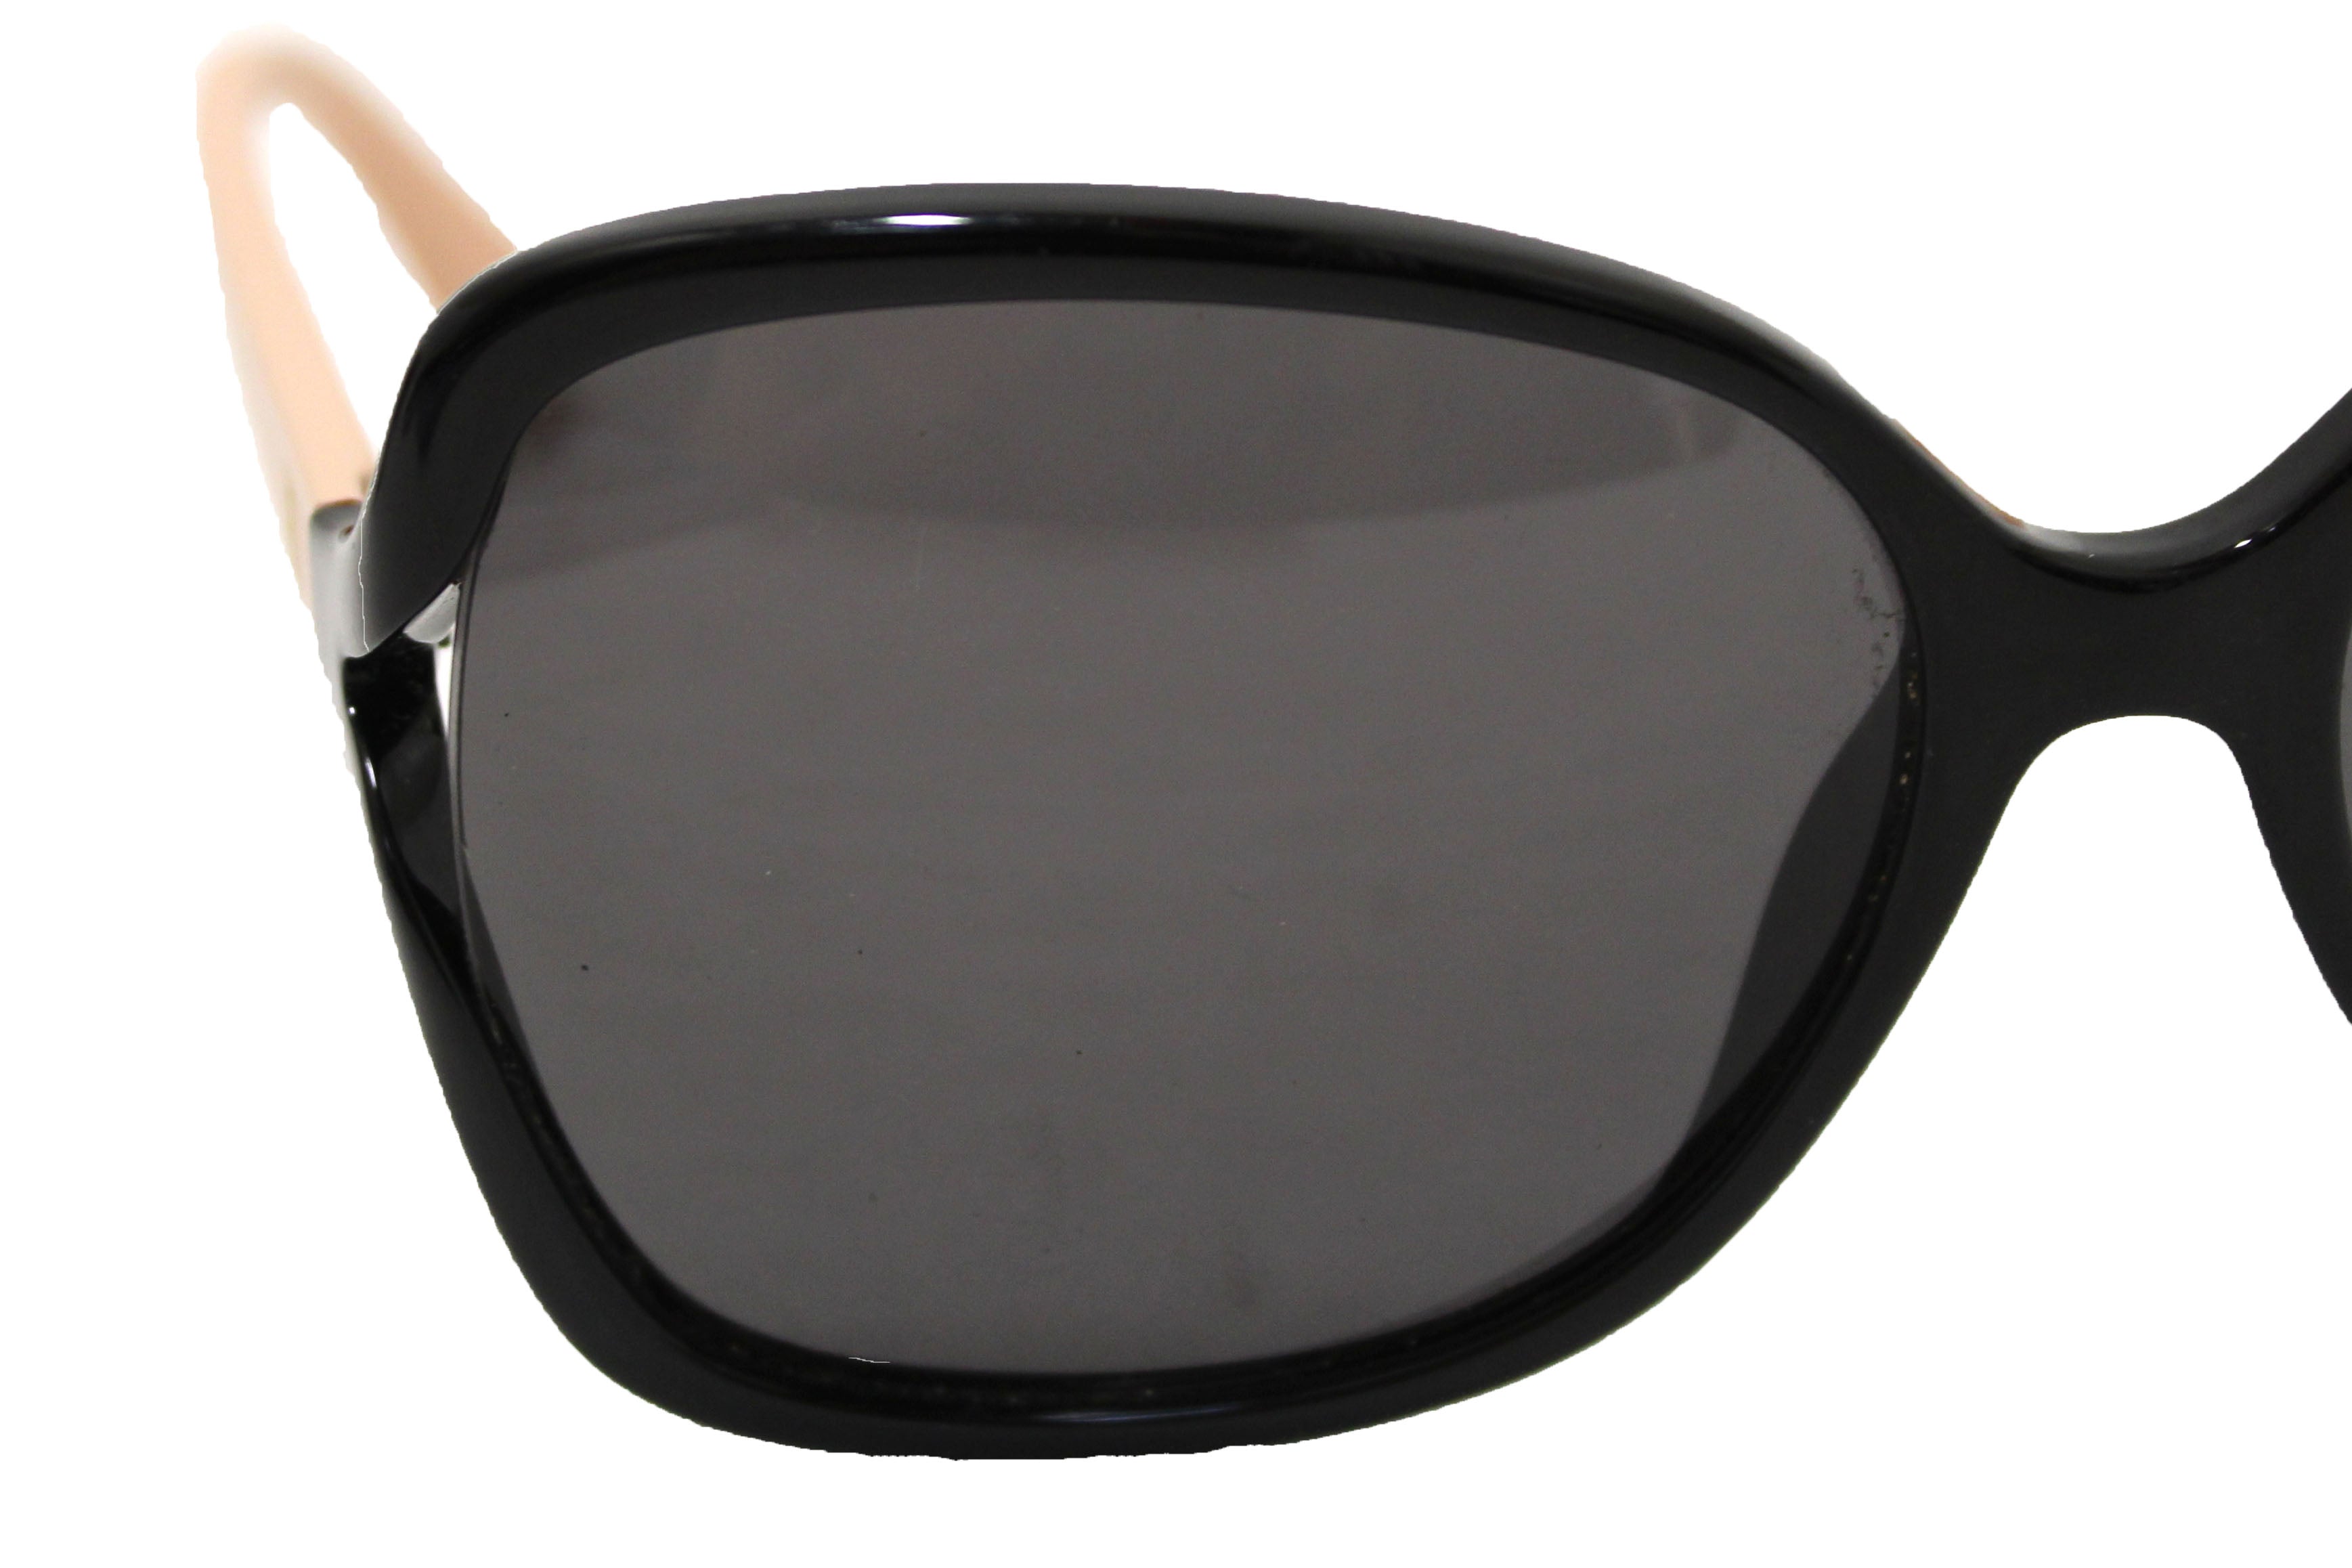 Fendi Light - Black sunglasses